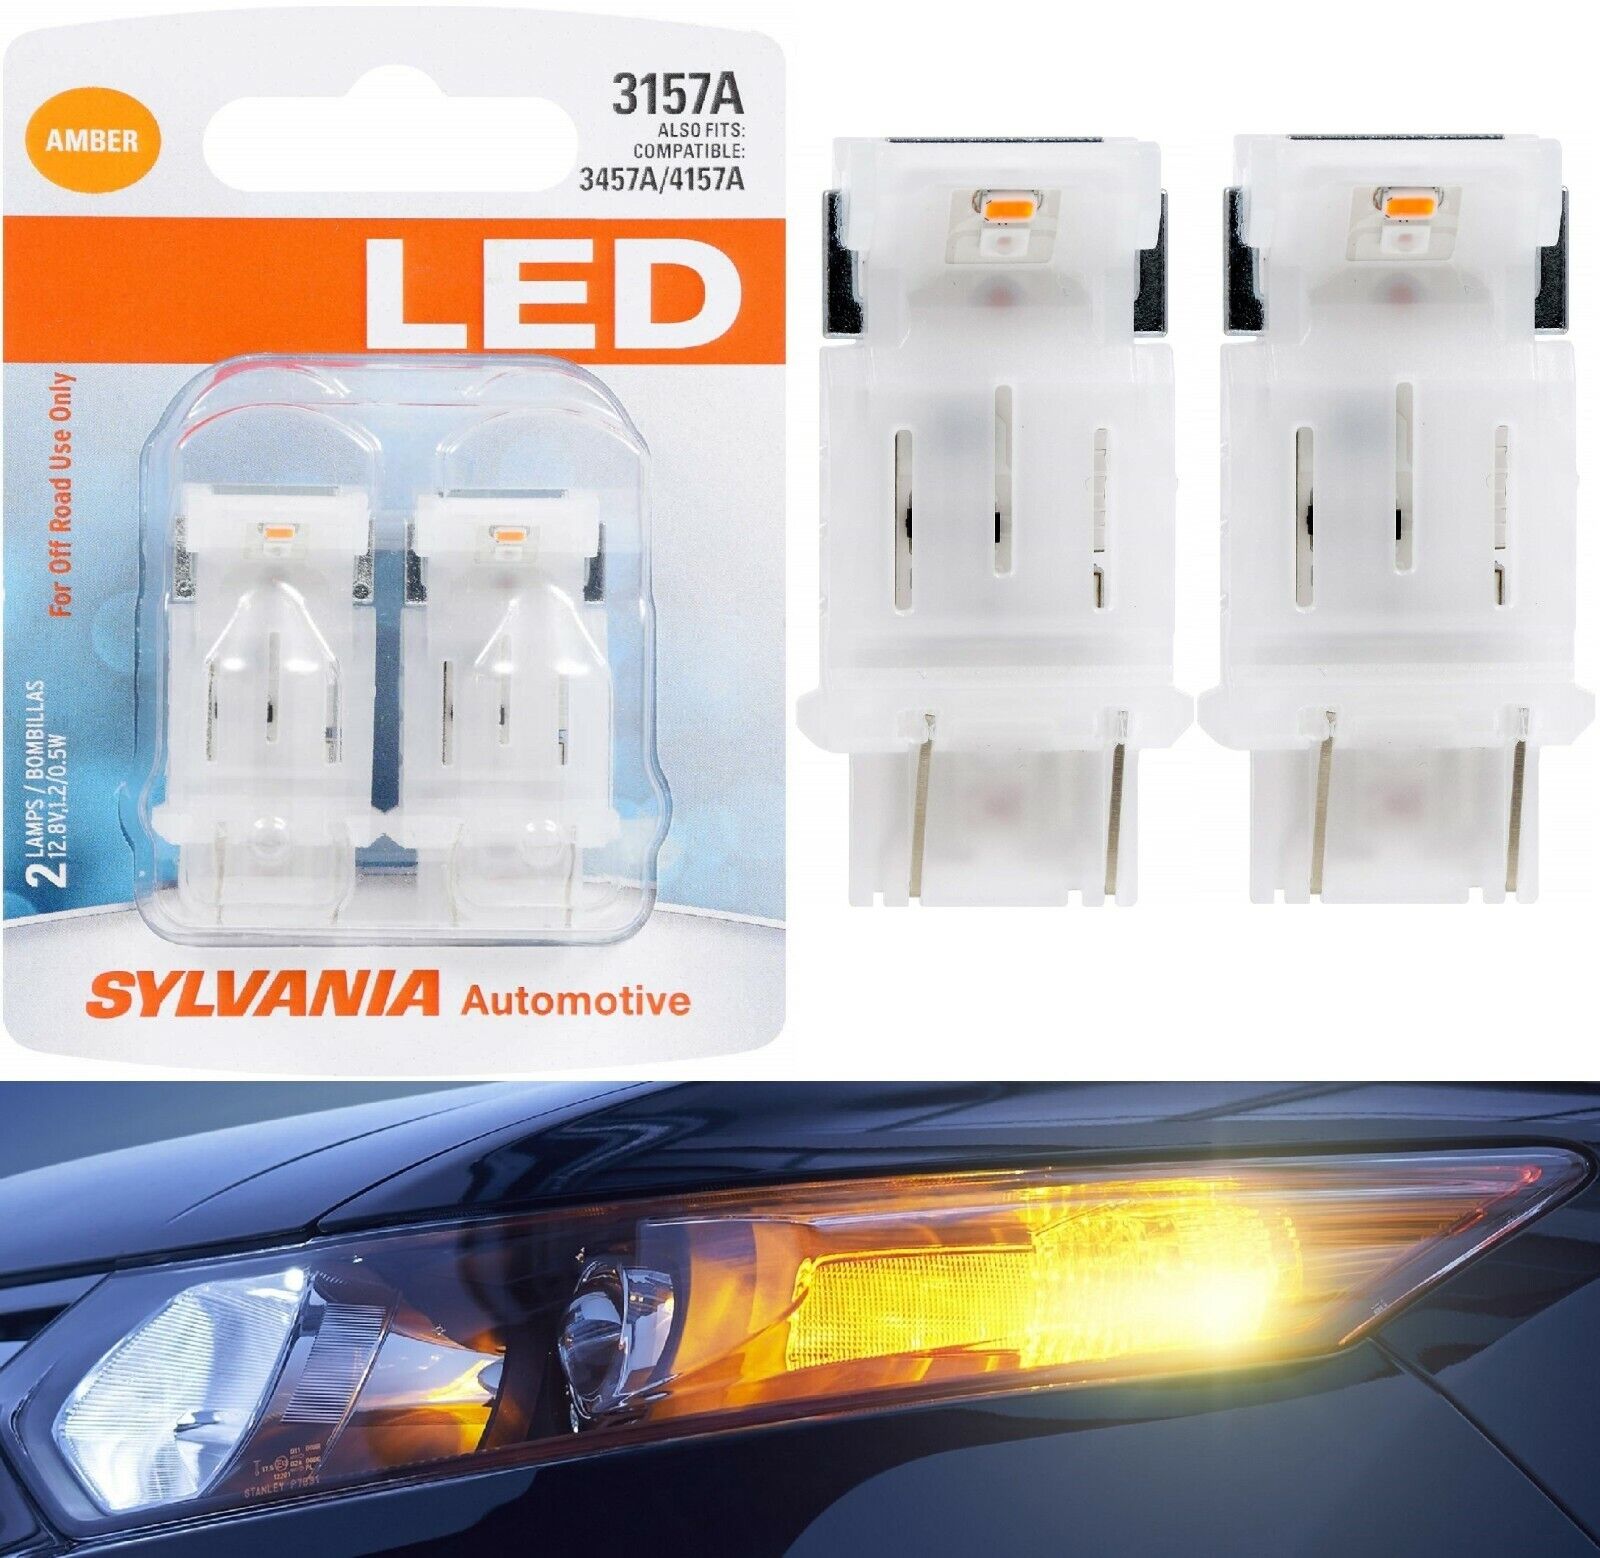 Sylvania LED Light 3157 Amber Orange Two Bulbs Front Turn Signal Replace Upgrade